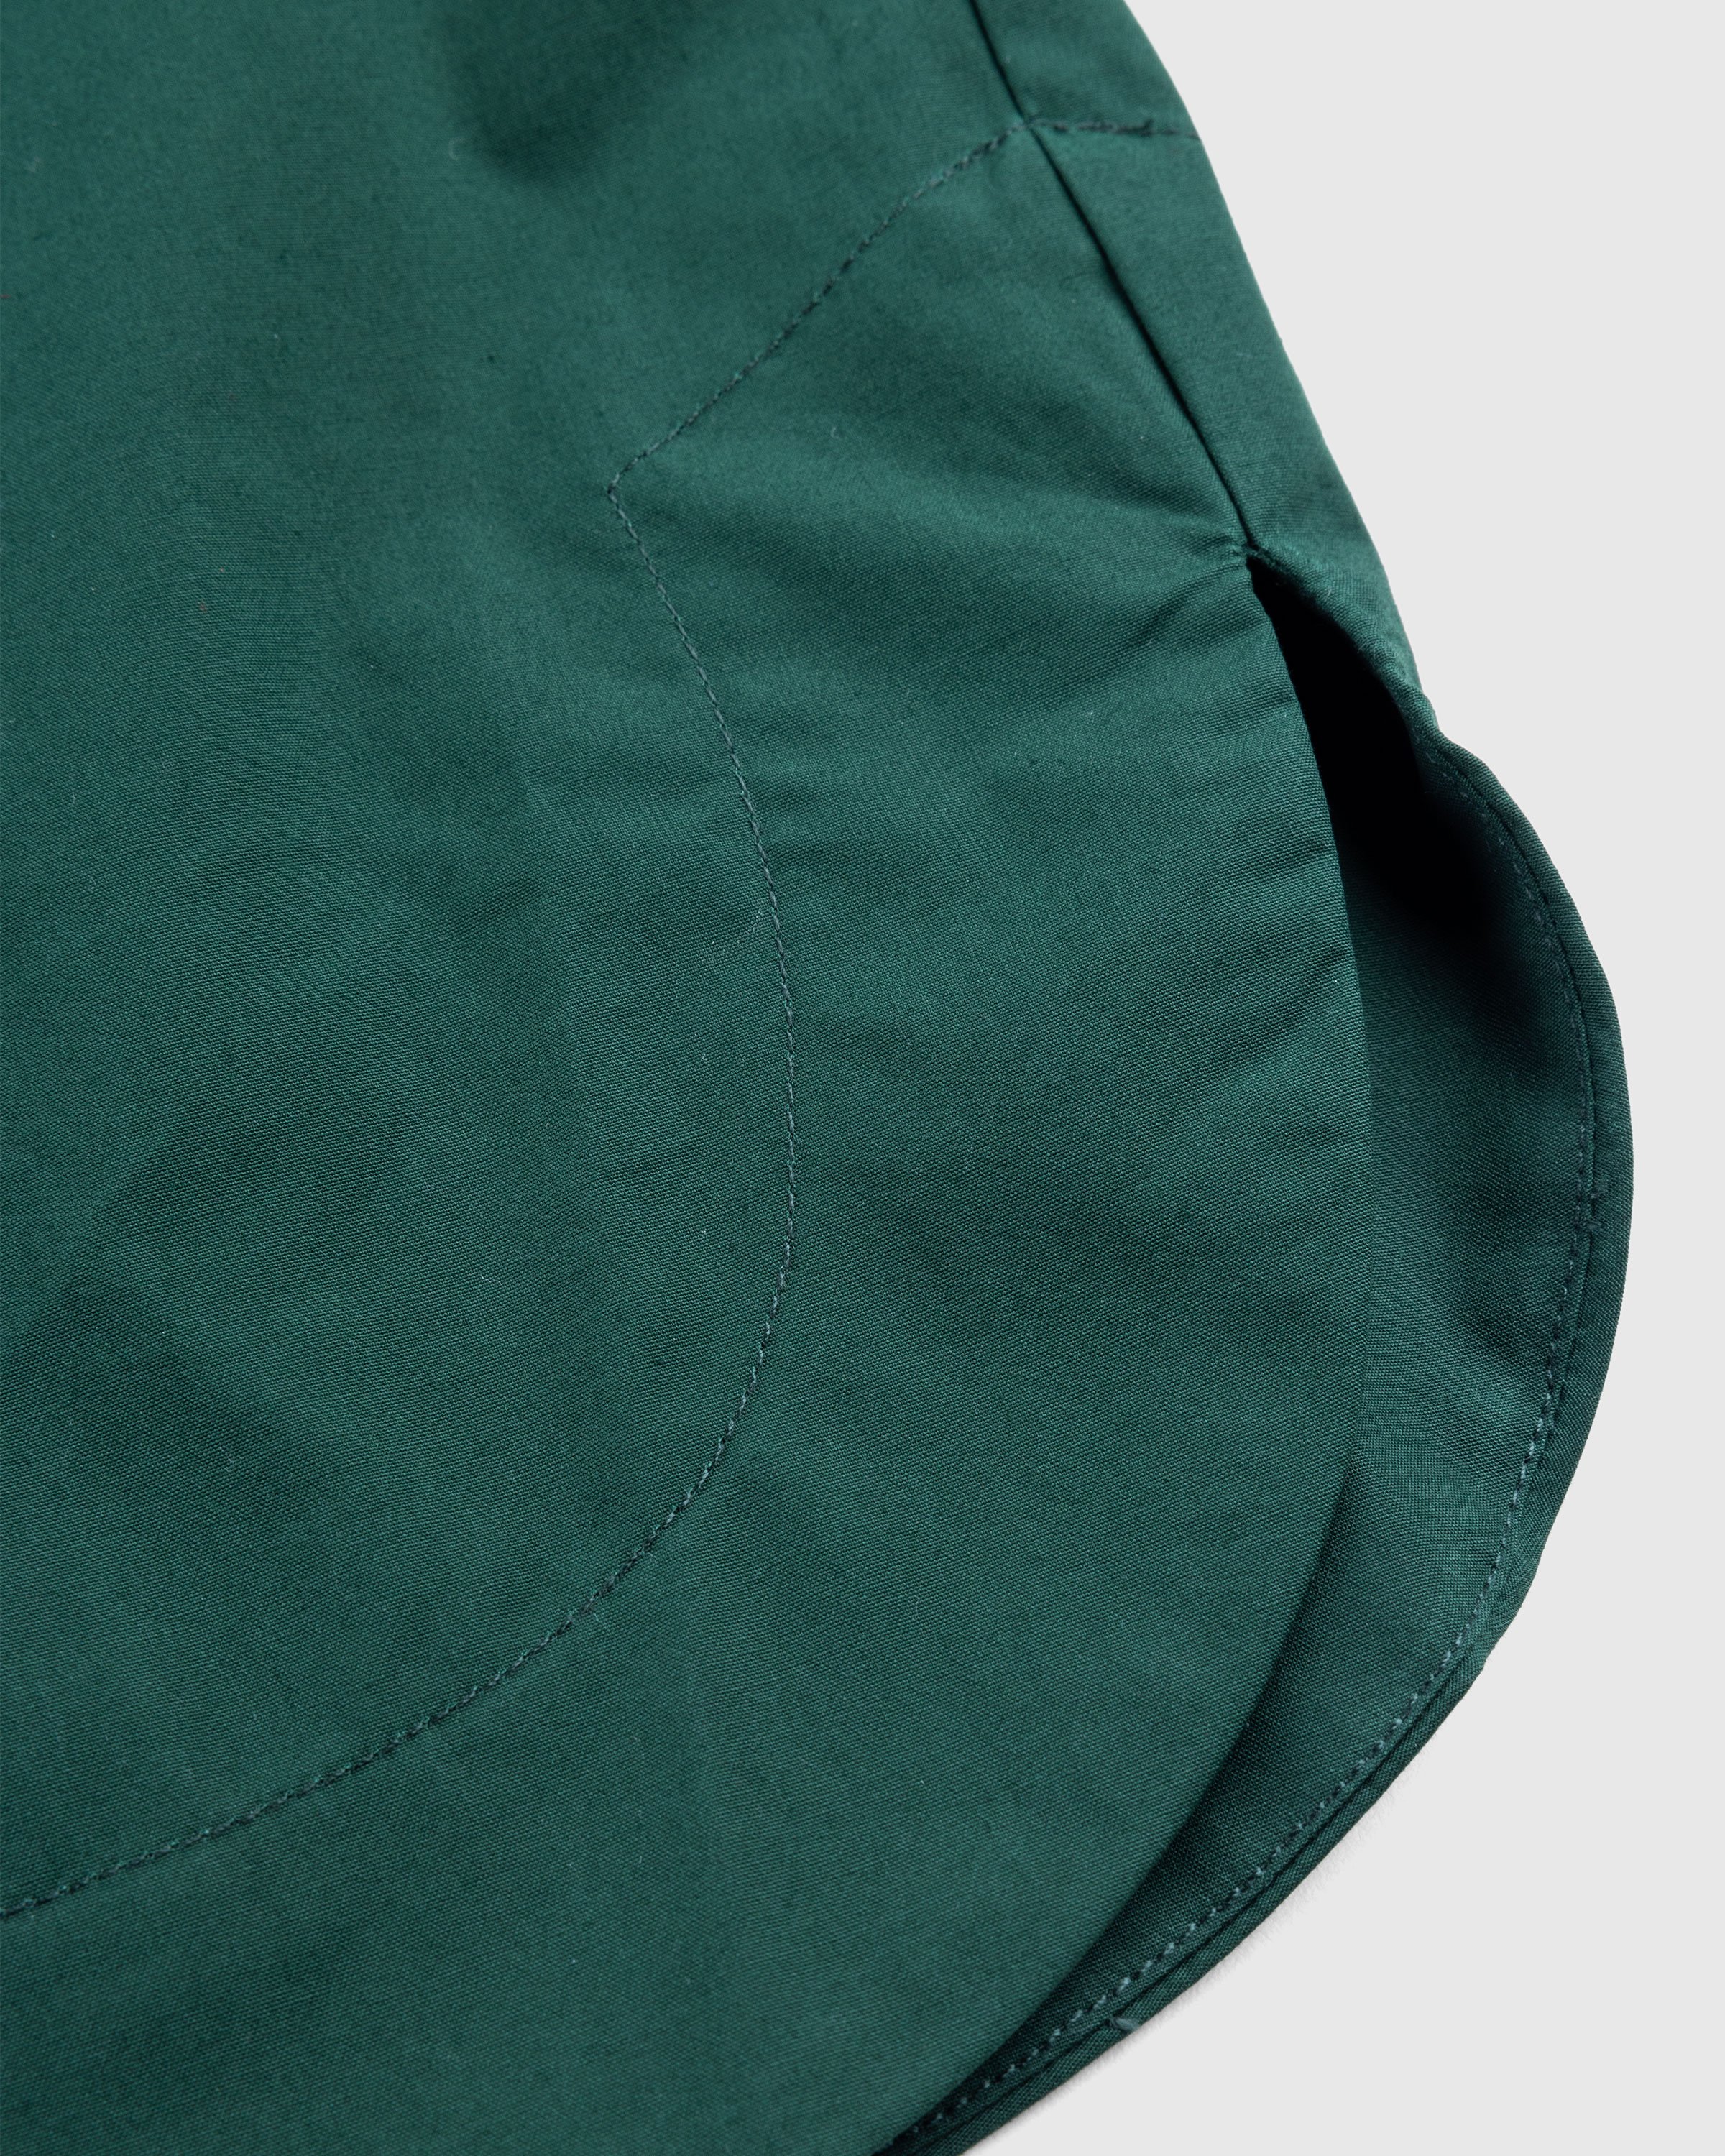 JACQUEMUS - LE HAUT POLO - Clothing - Green - Image 7